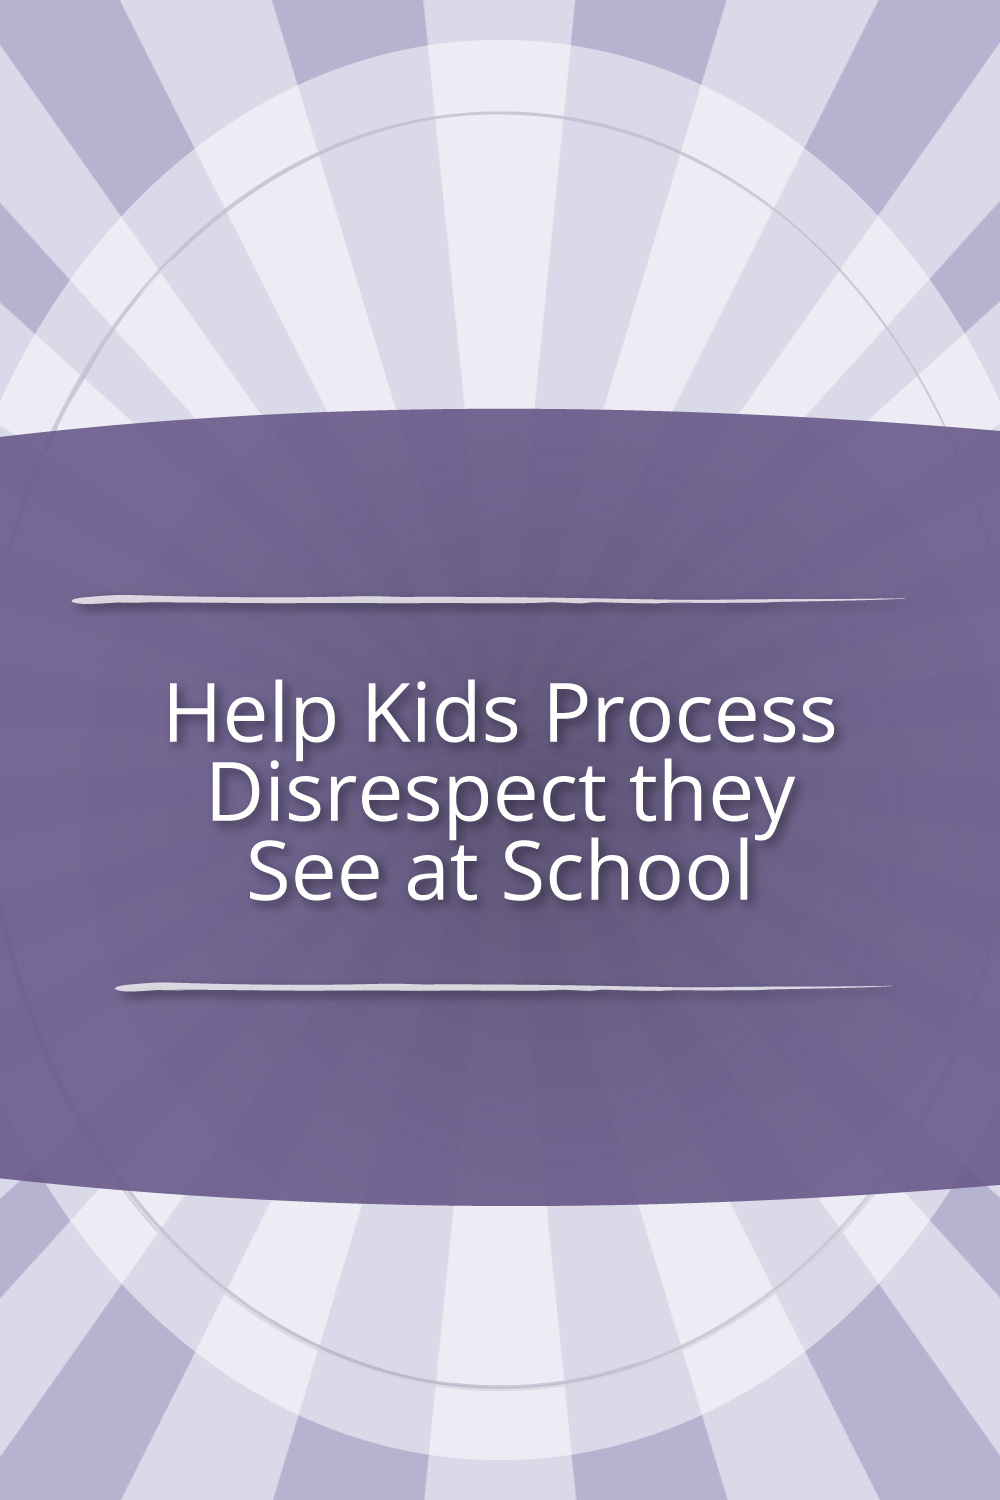 Help kids process disrespect at school